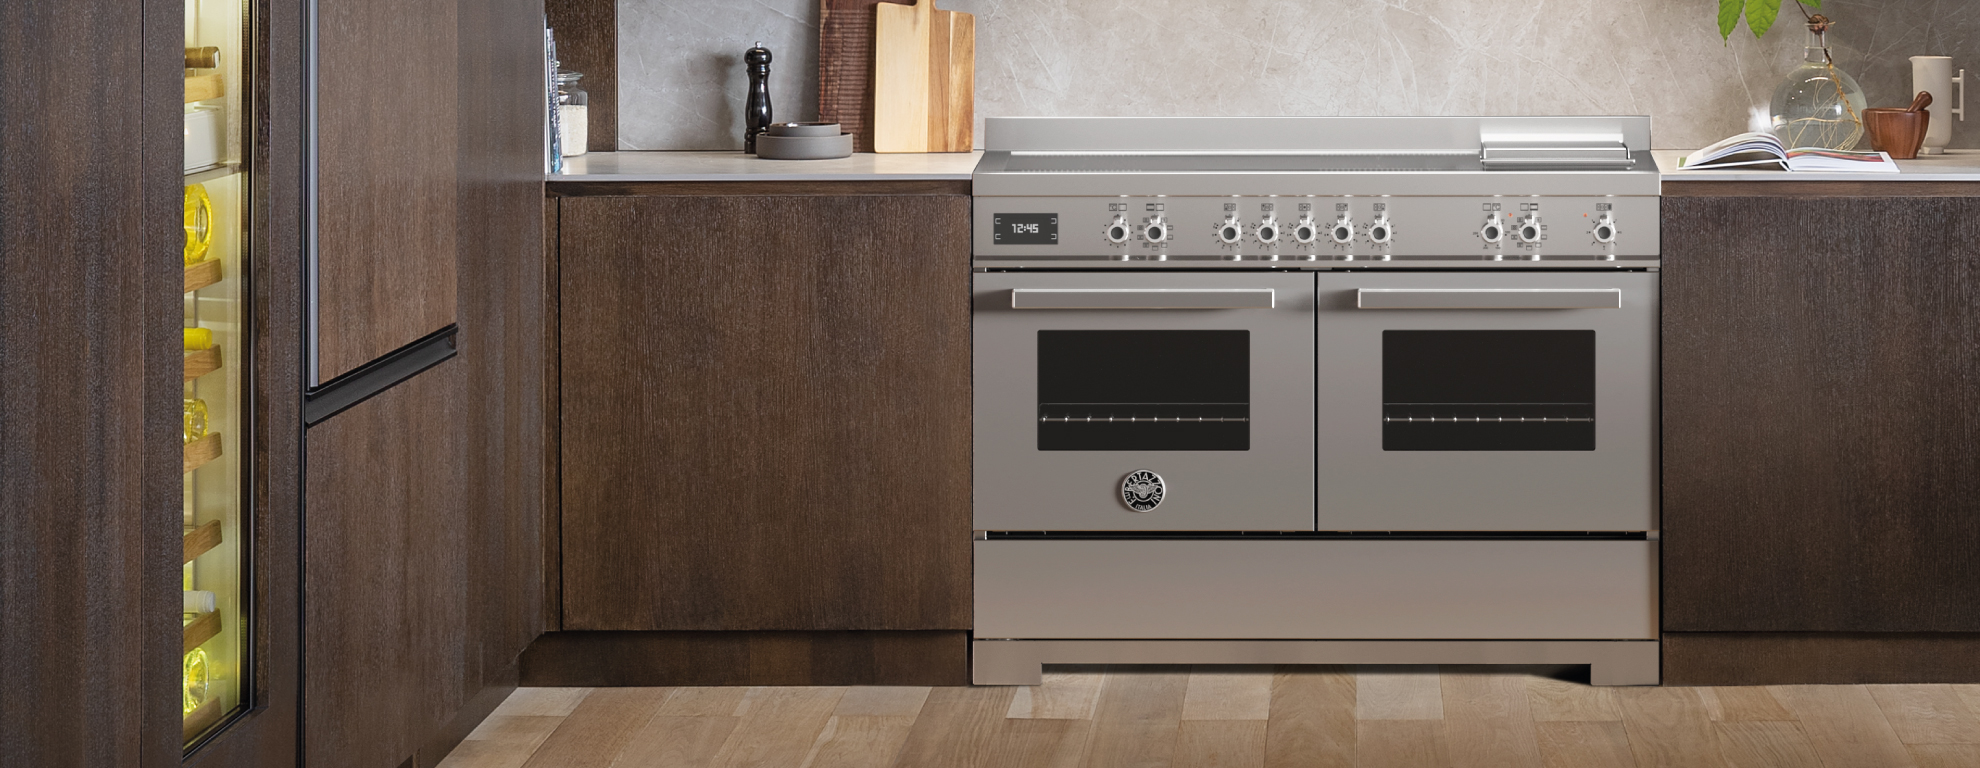 The Professional Series 120cm freestanding Cooker wins the A' Design Award - Bertazzoni